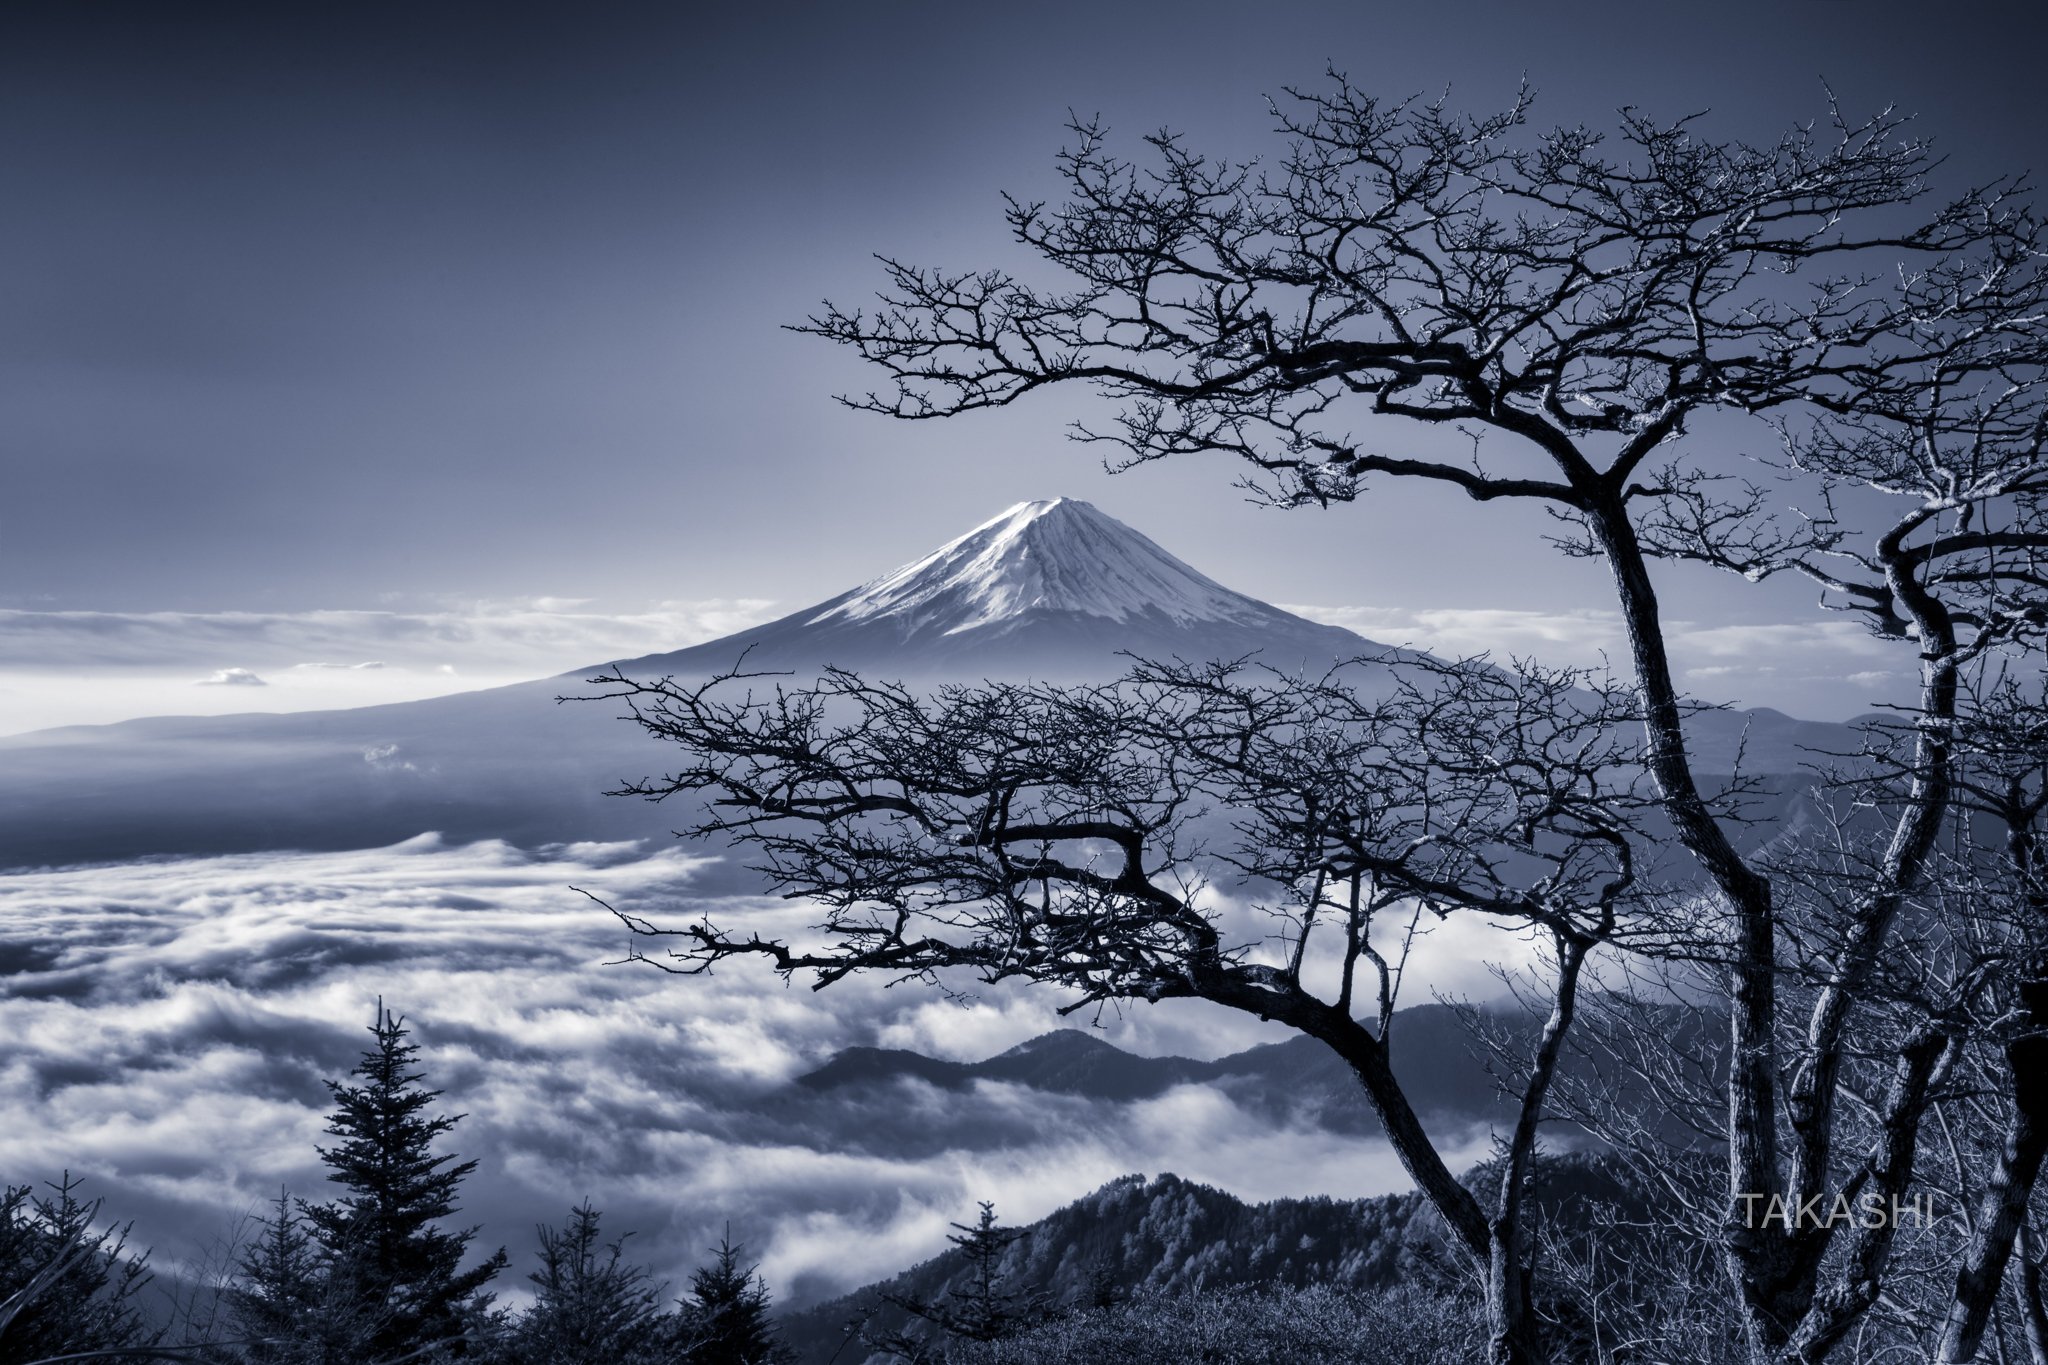 Fuji,Japan,mountain,clouds,tree,bonsai,snow,blue, Takashi